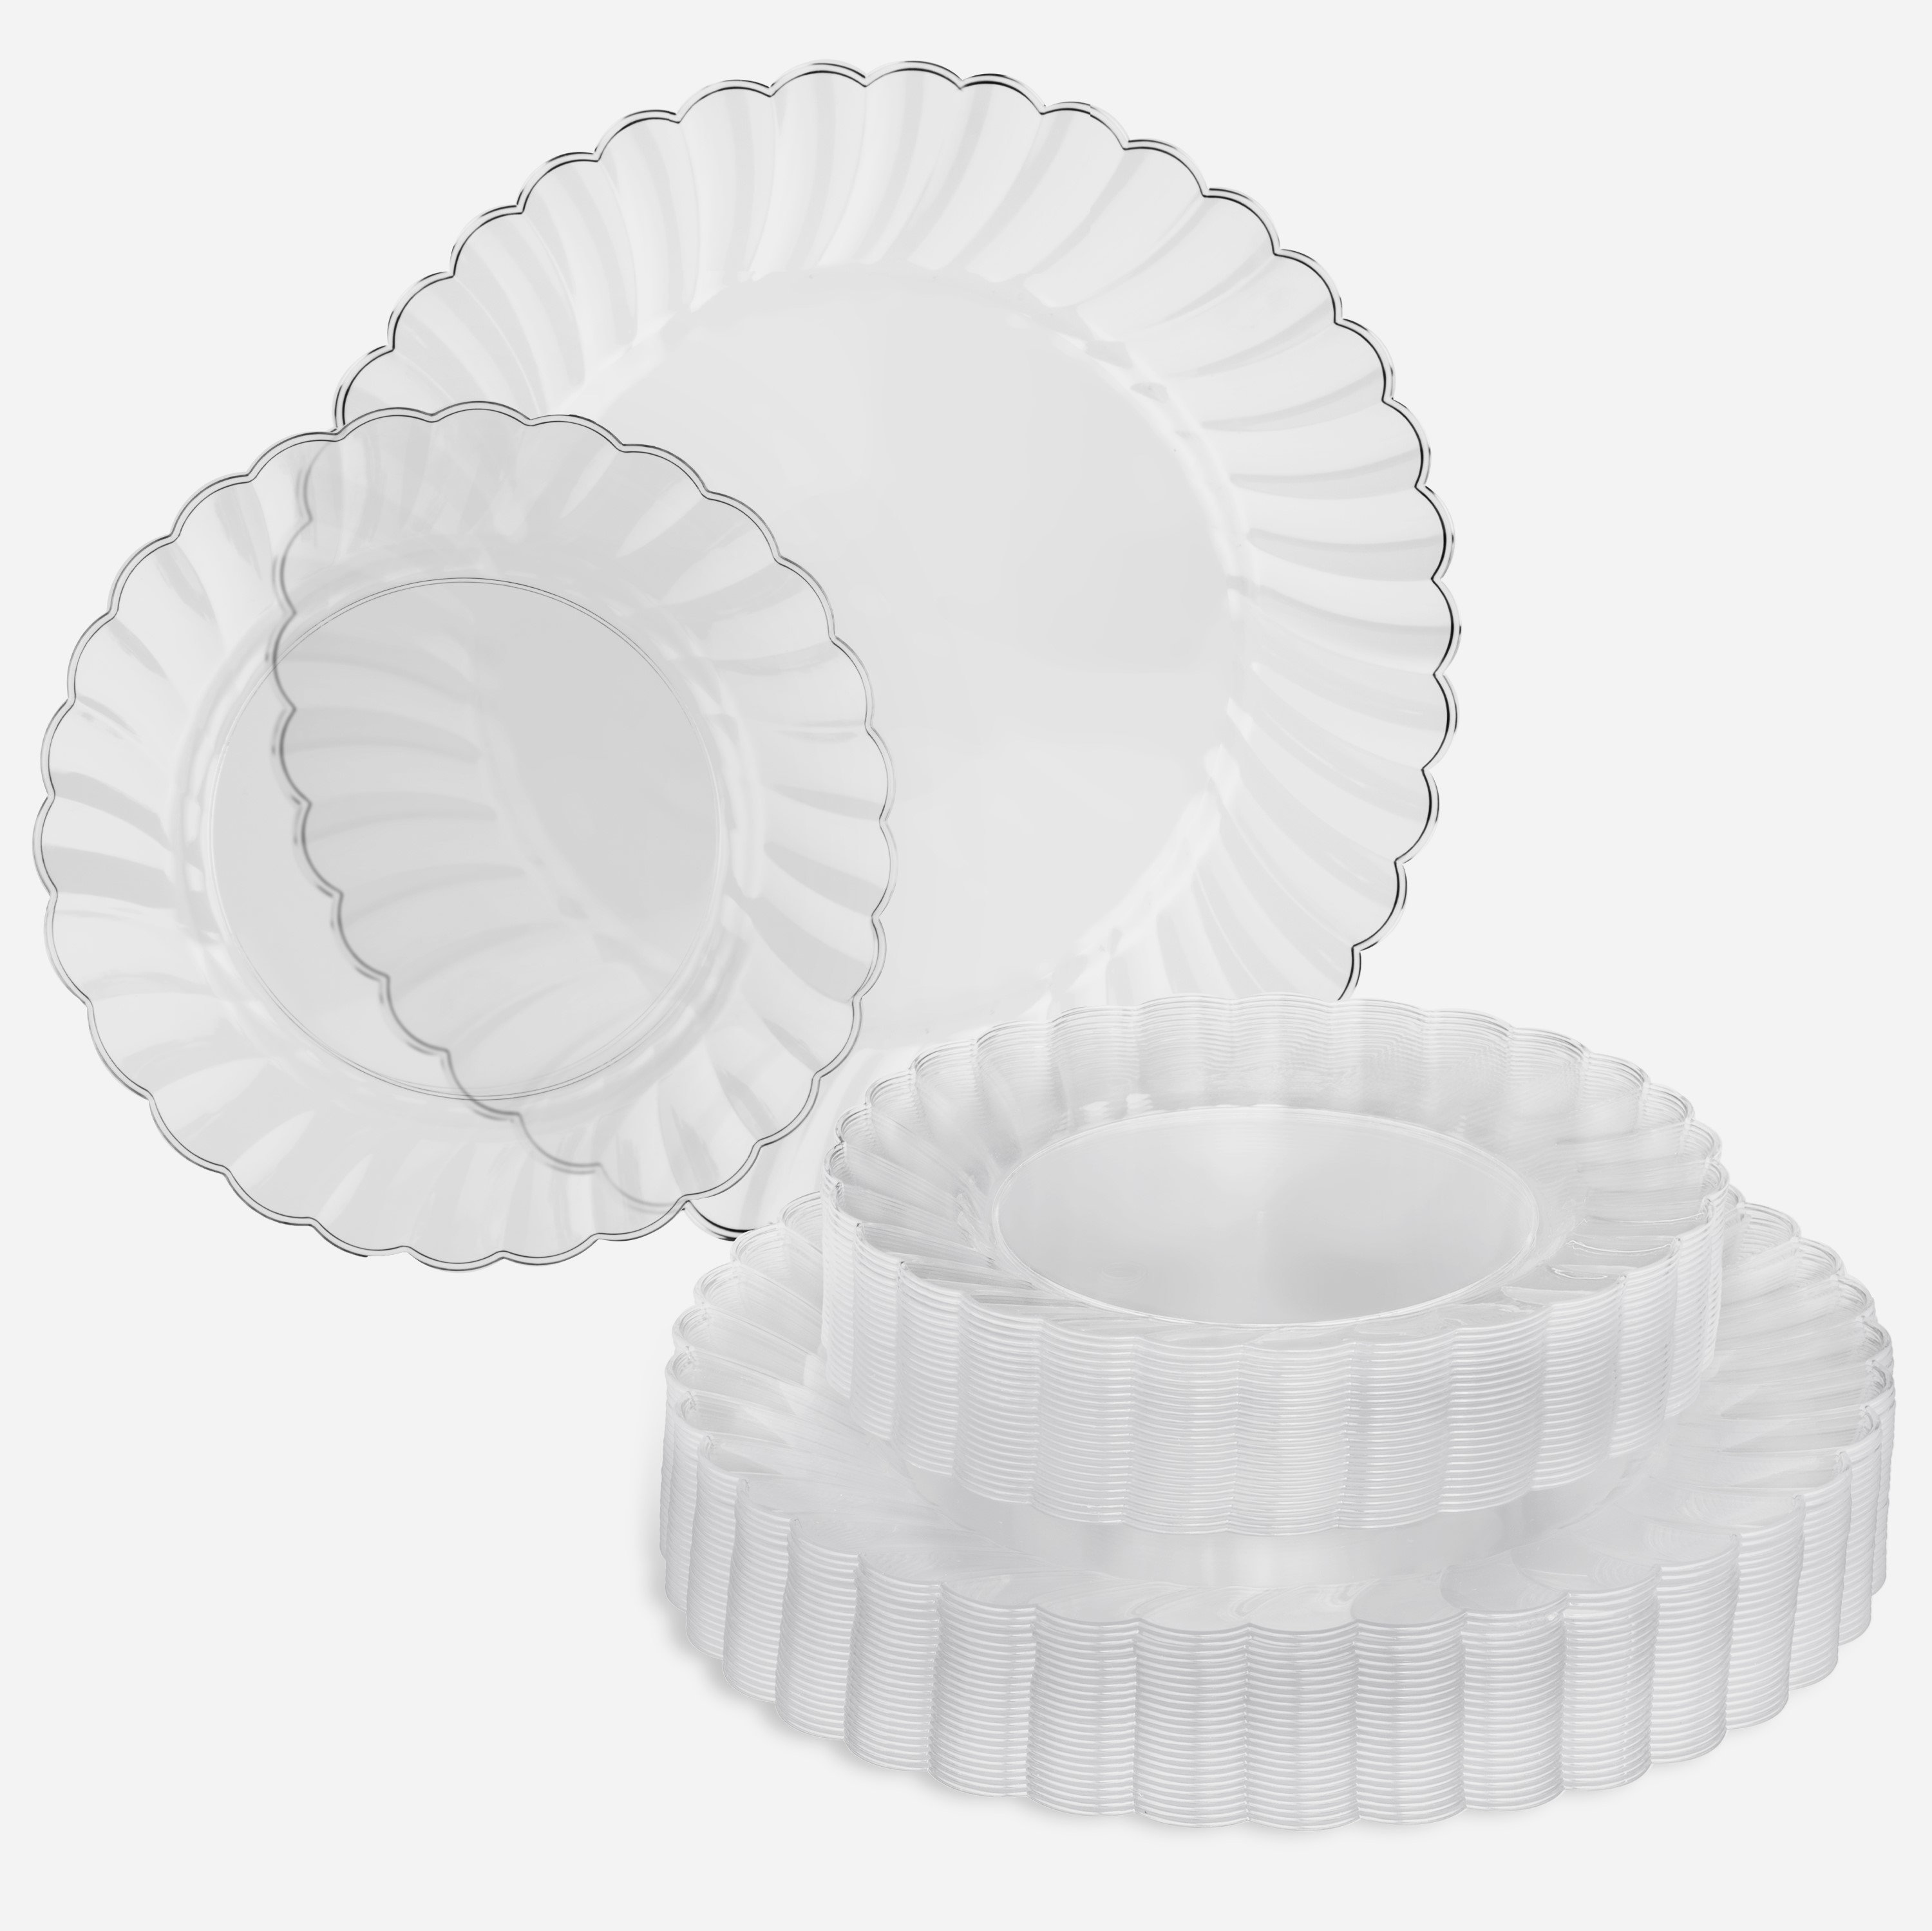 250 Pcs Square Plastic Plates Disposable Plates Plastic Party Square Plates  Set Include 50 Dinner Plates 50 Dessert Plates 50 Forks 50 Knives 50 Sp 